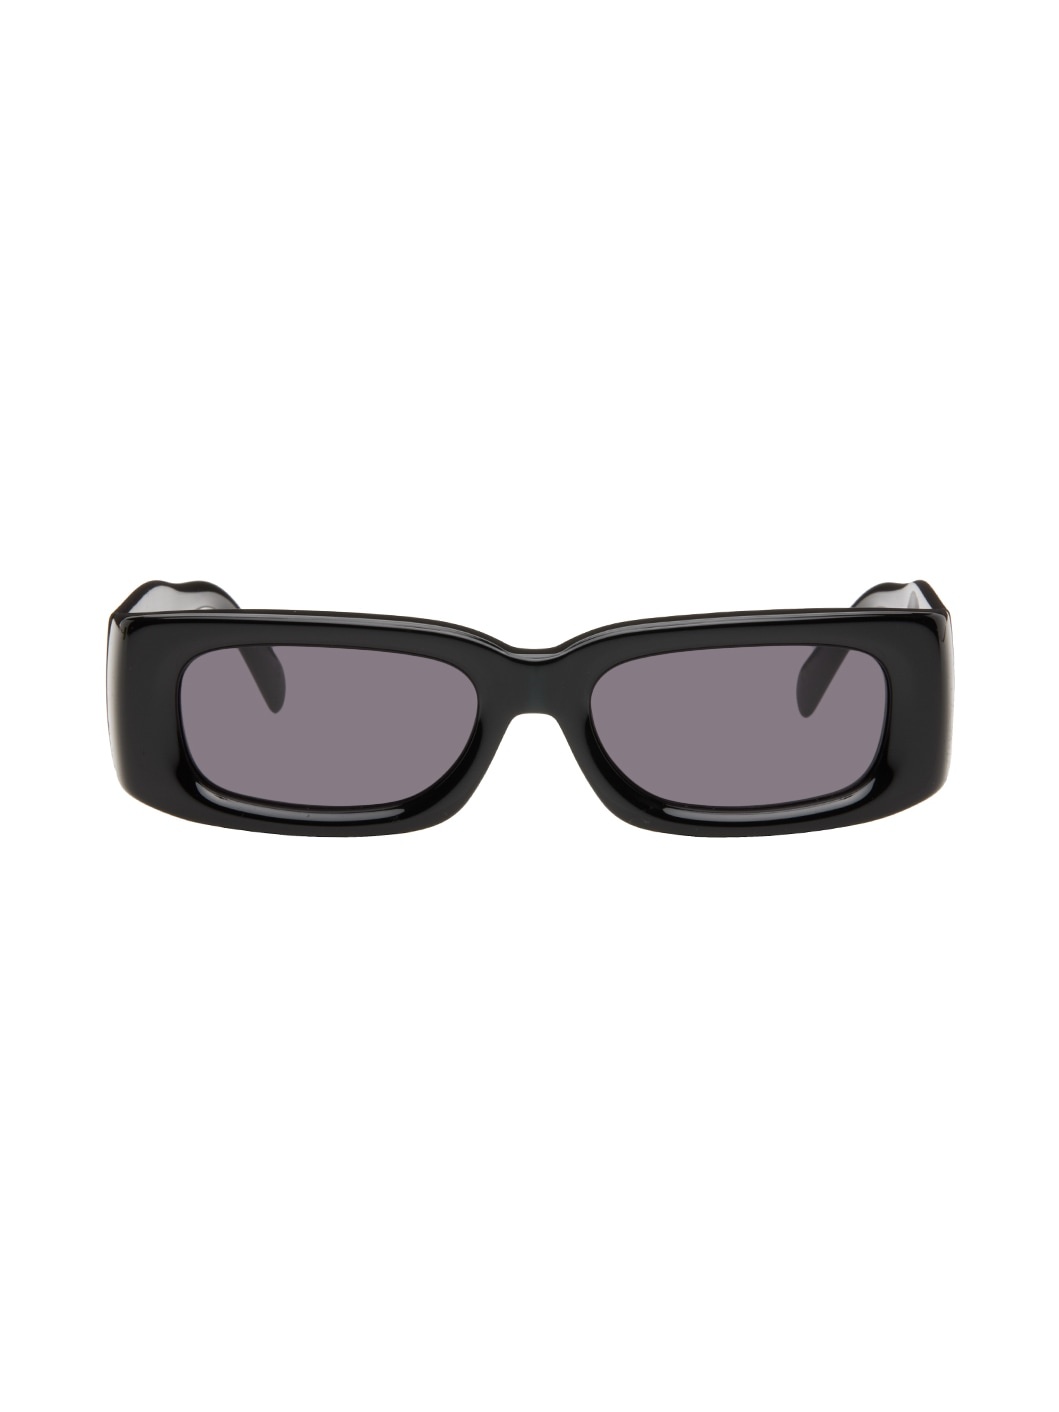 Black 1994 Sunglasses - 1